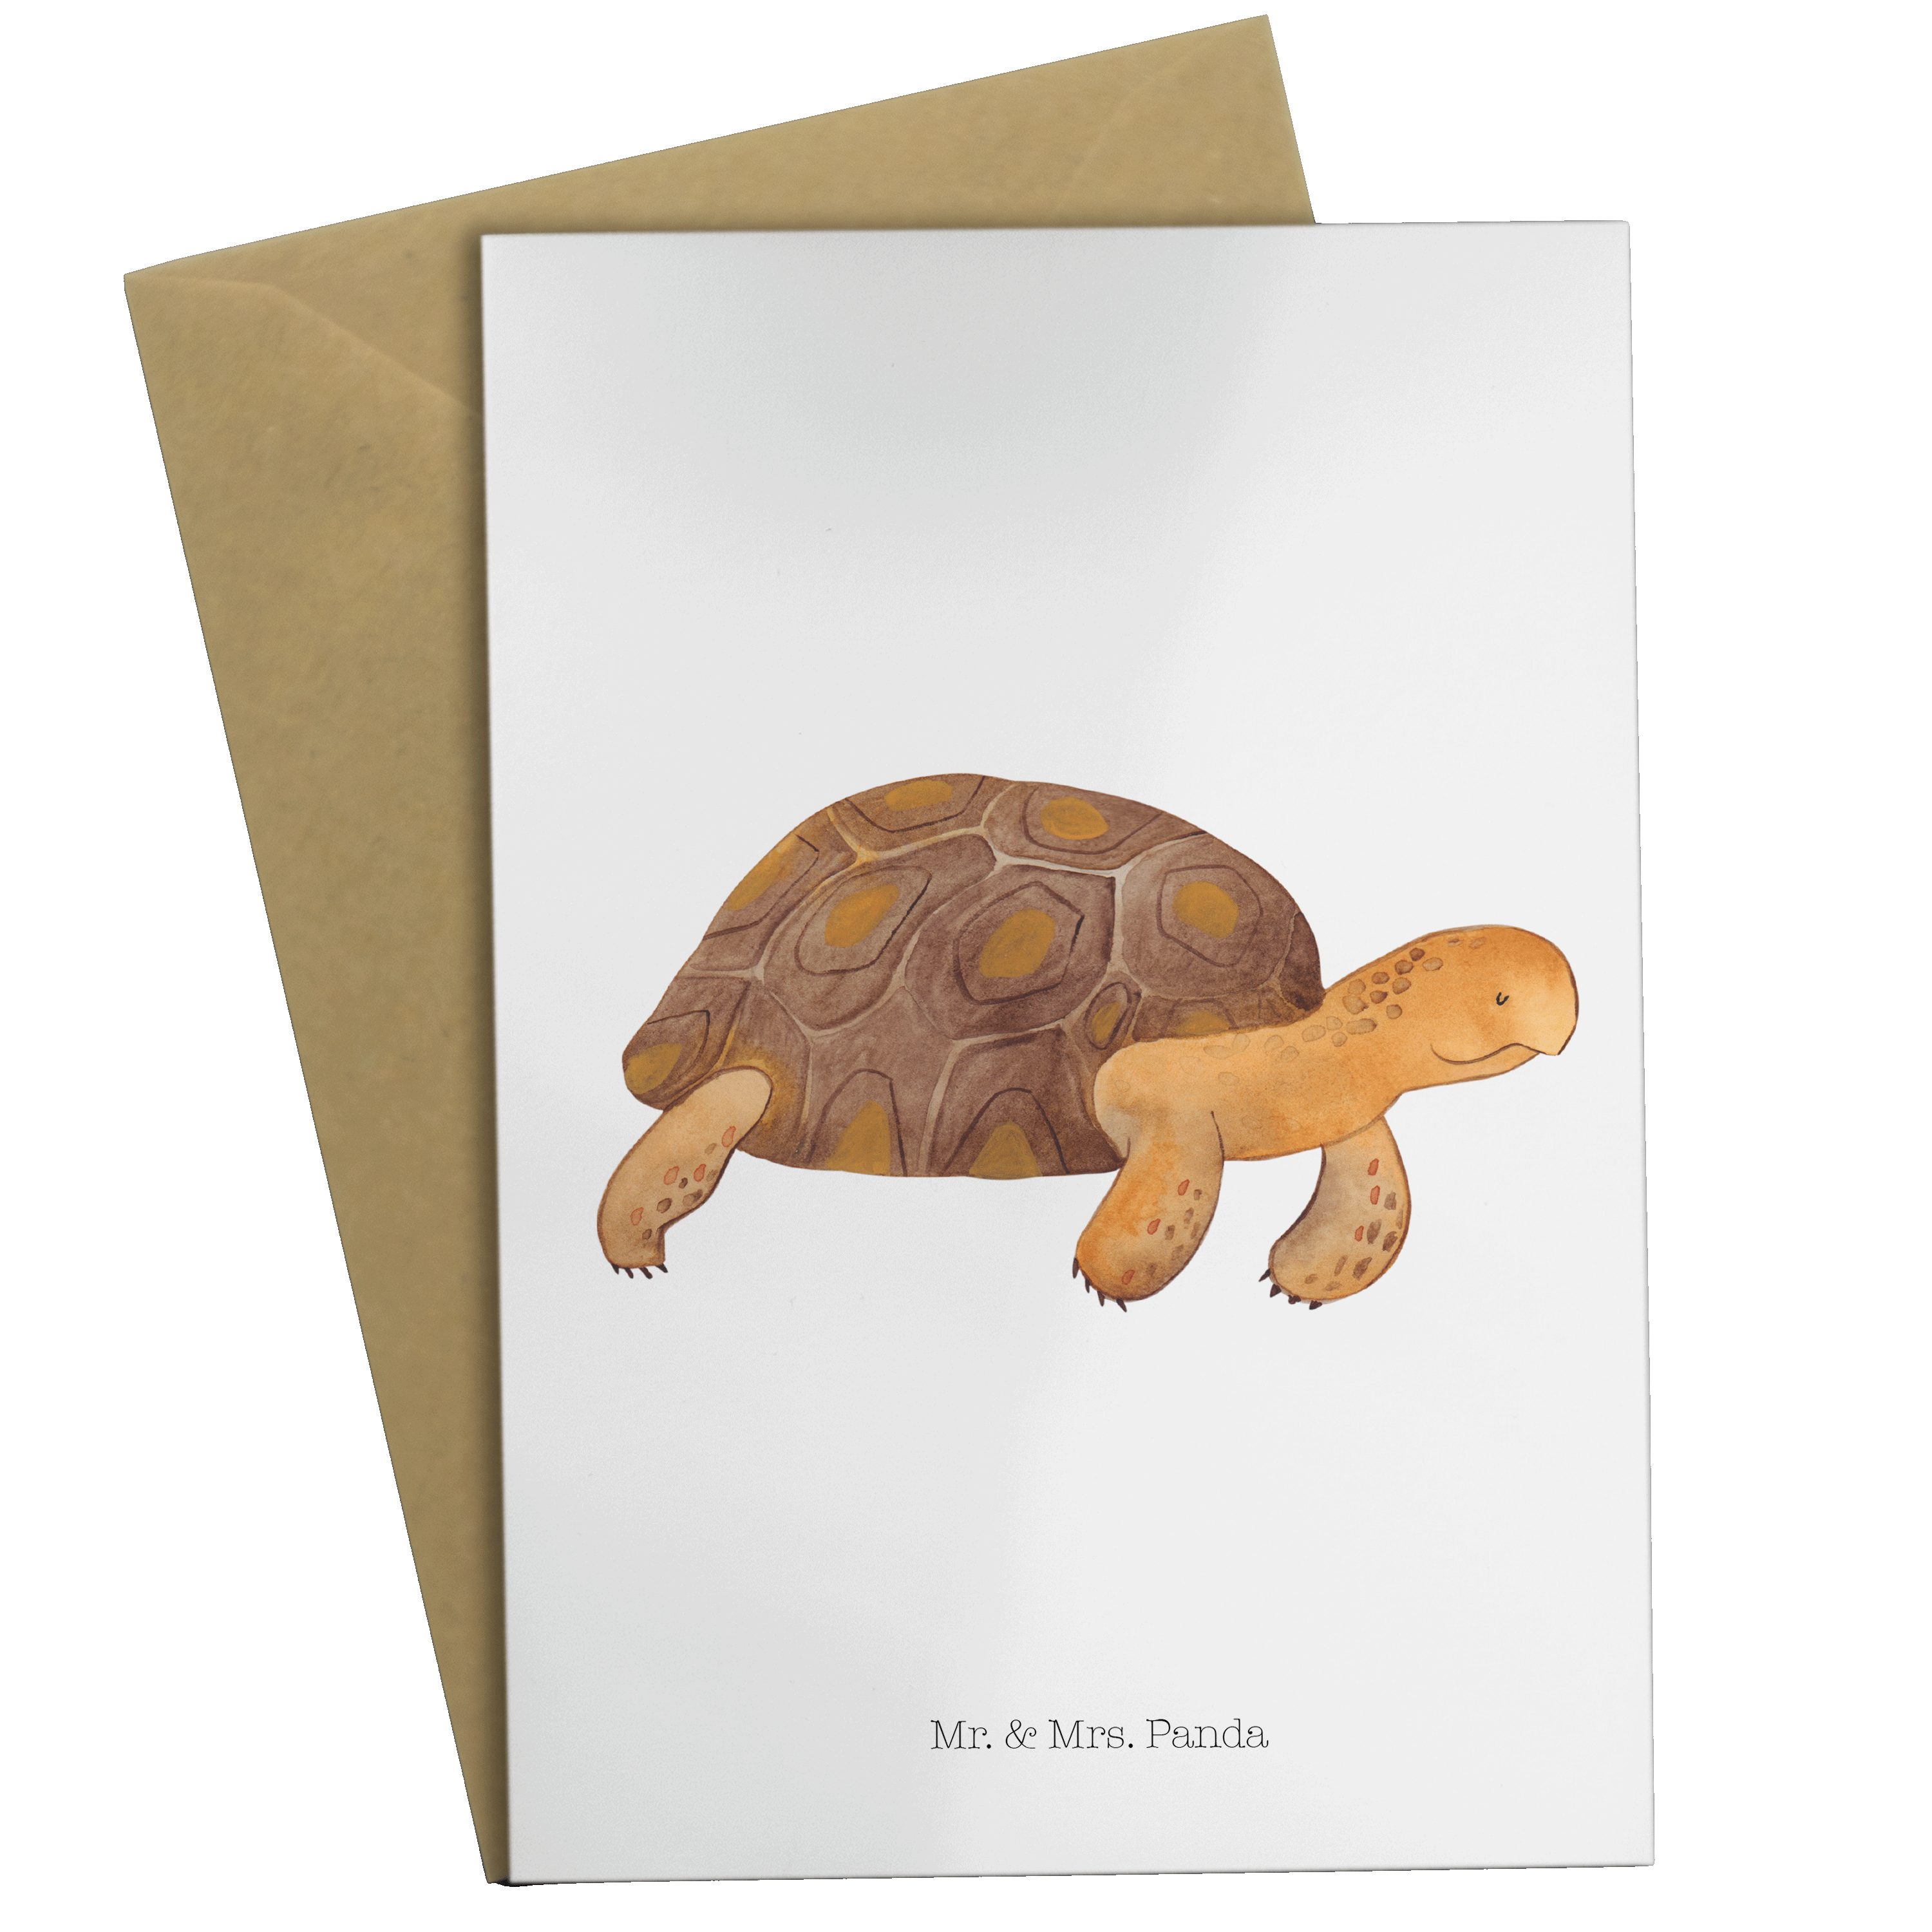 Mr. & Mrs. Panda Grußkarte Schildkröte marschiert - Weiß - Geschenk, Lieblingsmensch, Klappkarte